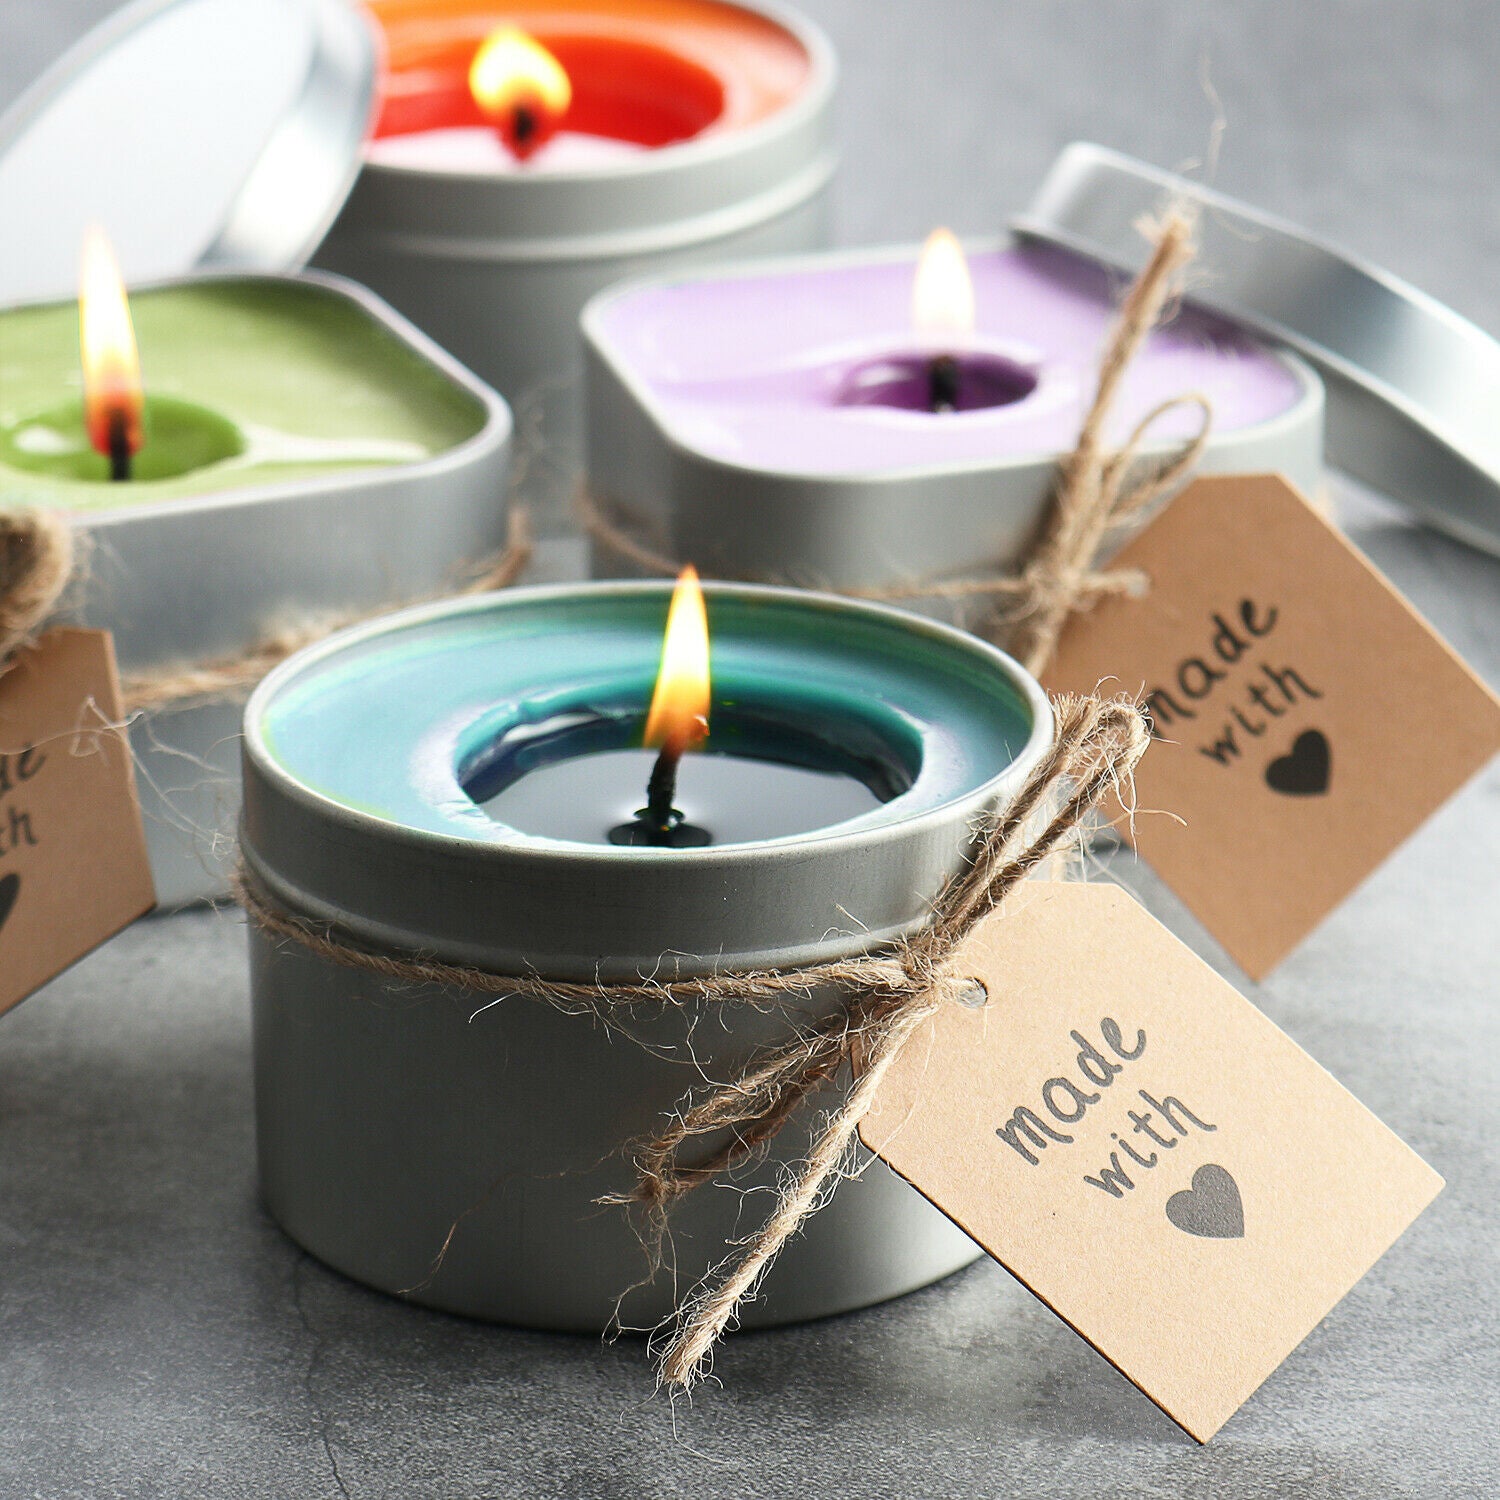 Candle Making Kits - Candle Making Kit- Soy Wax, Thermometer, Tins, Wicks, Melting Pot -